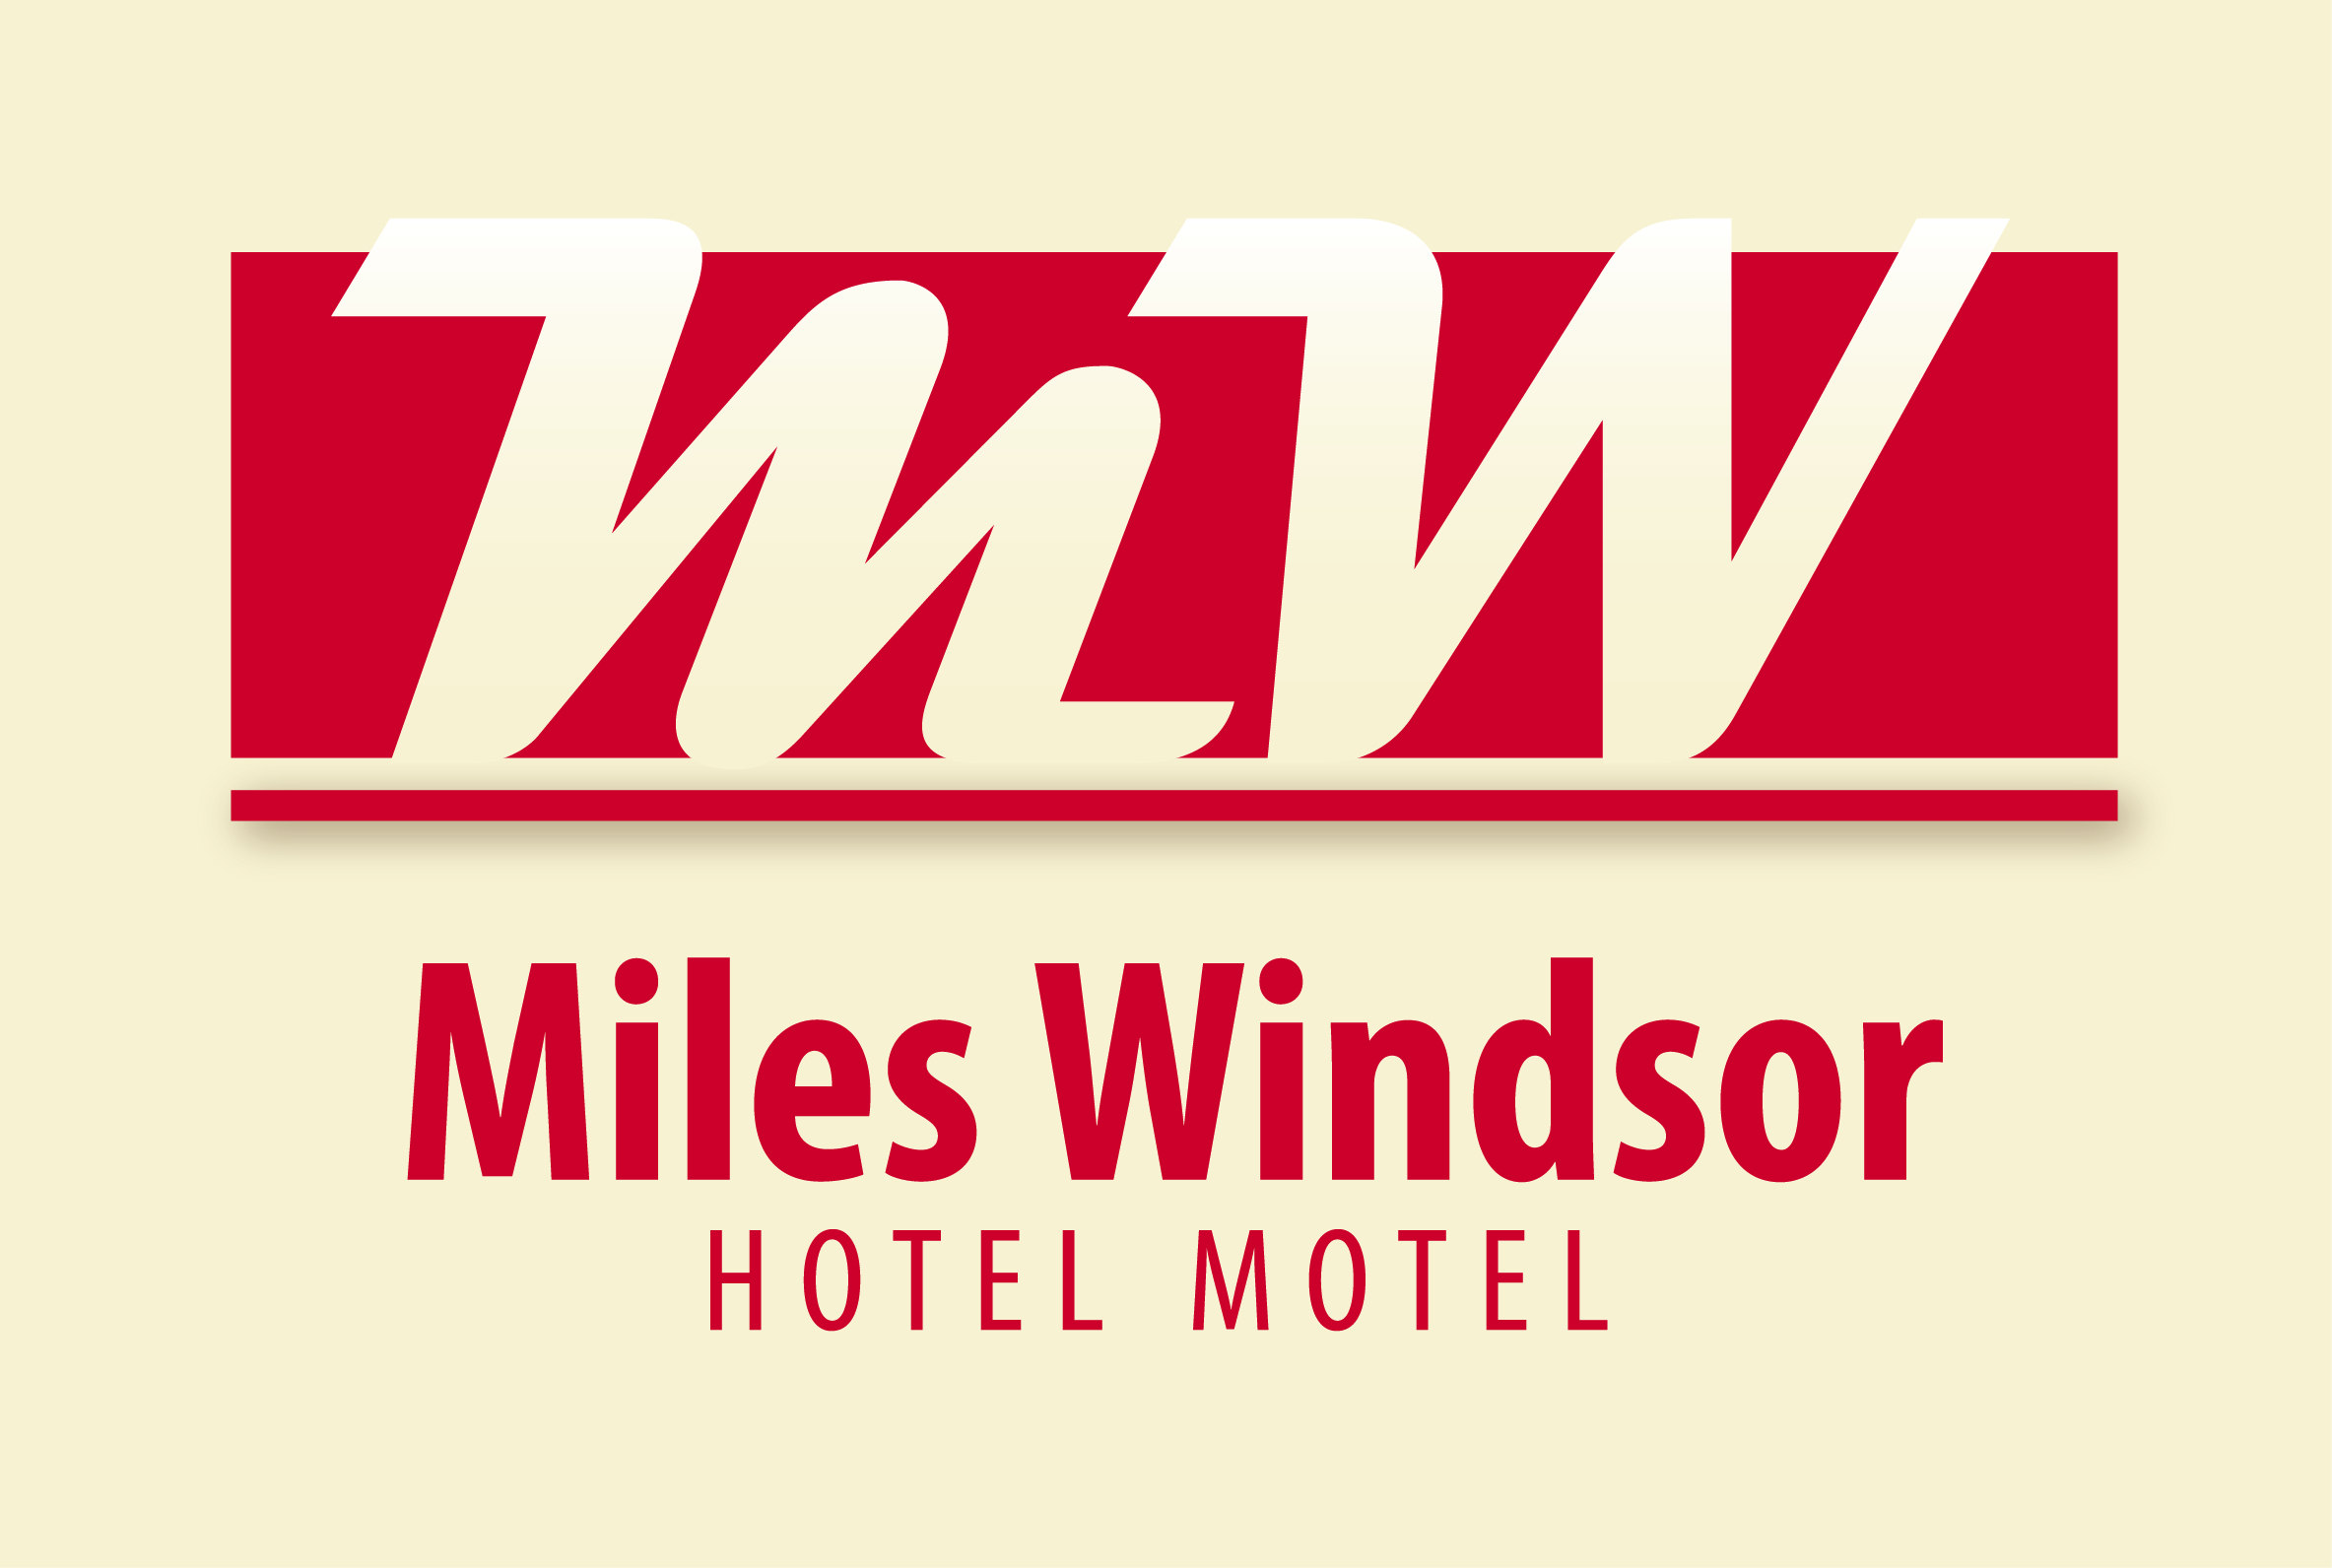 Miles Windsor Hotel Motel